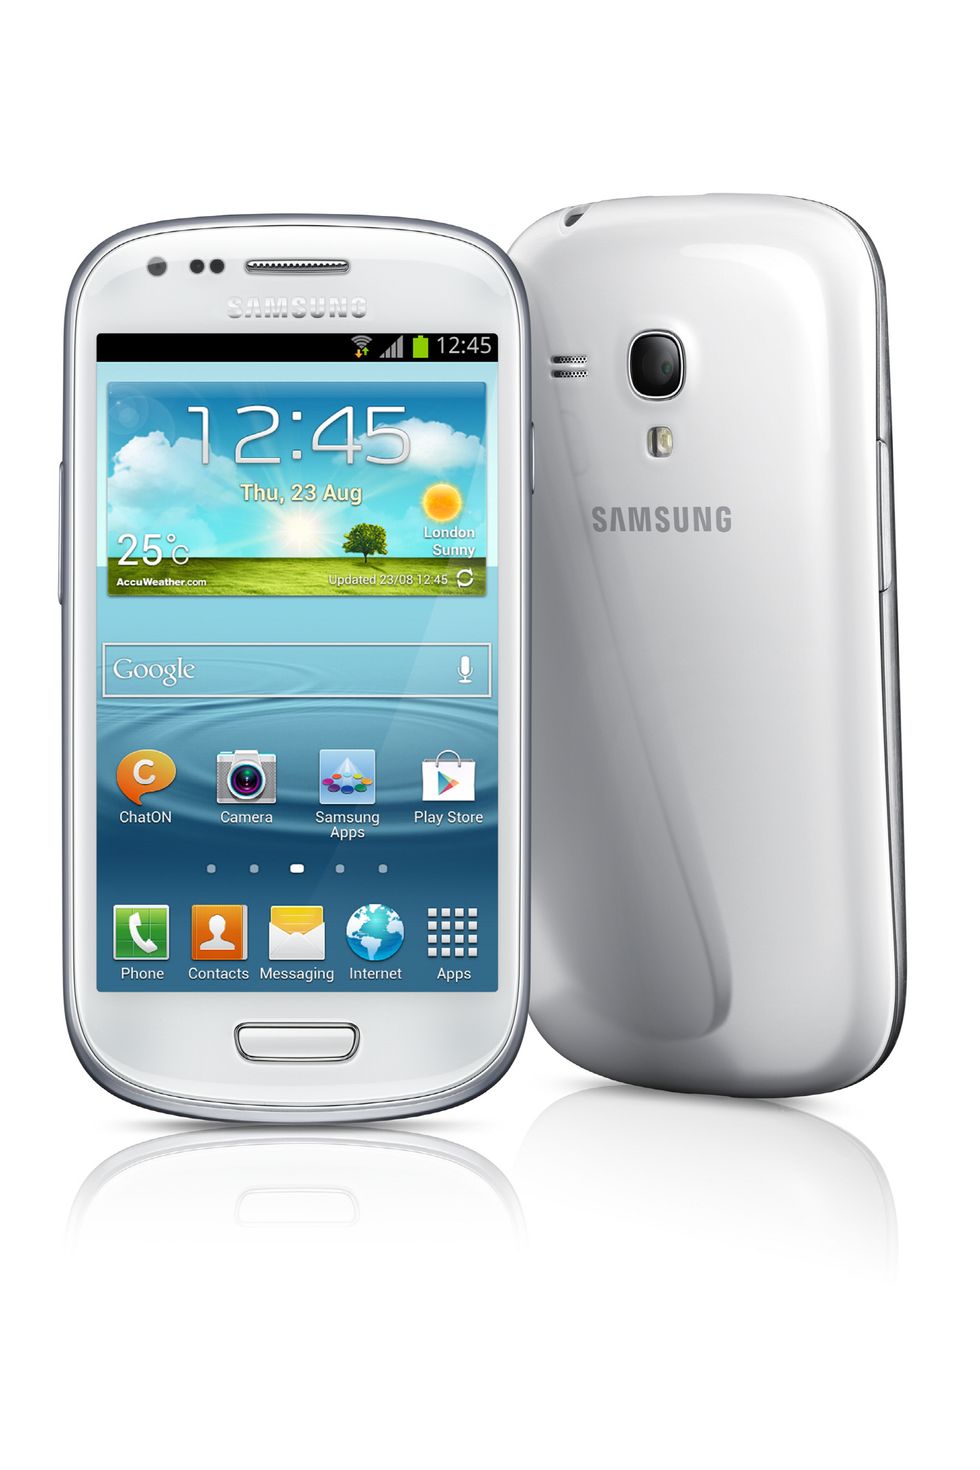 Top 5 smartphone: comanda Samsung, ma la sorpresa è ZTE